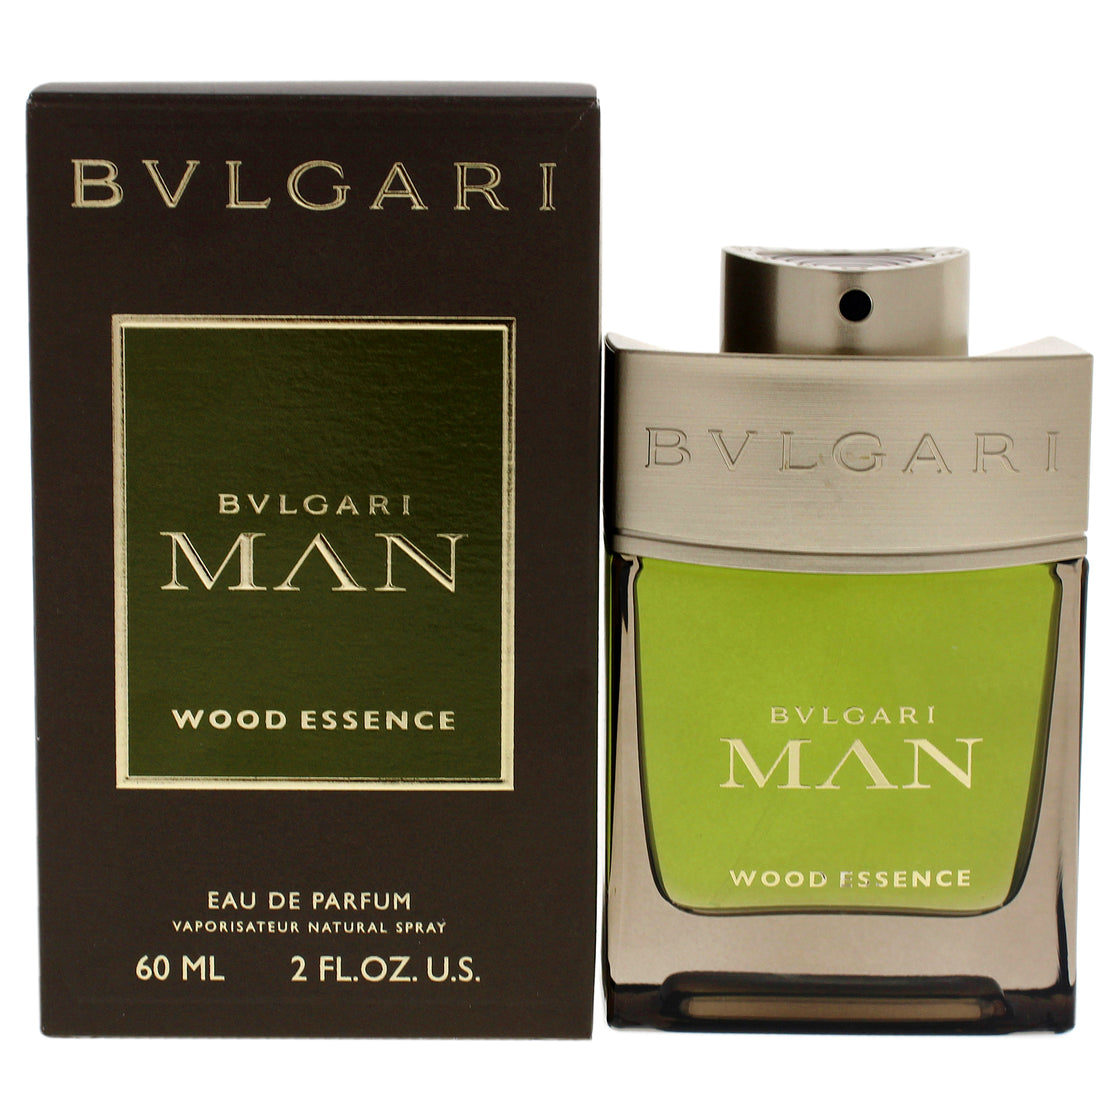 Bvlgari Man Wood Essence by Bvlgari for Men - 2 oz EDP Spray